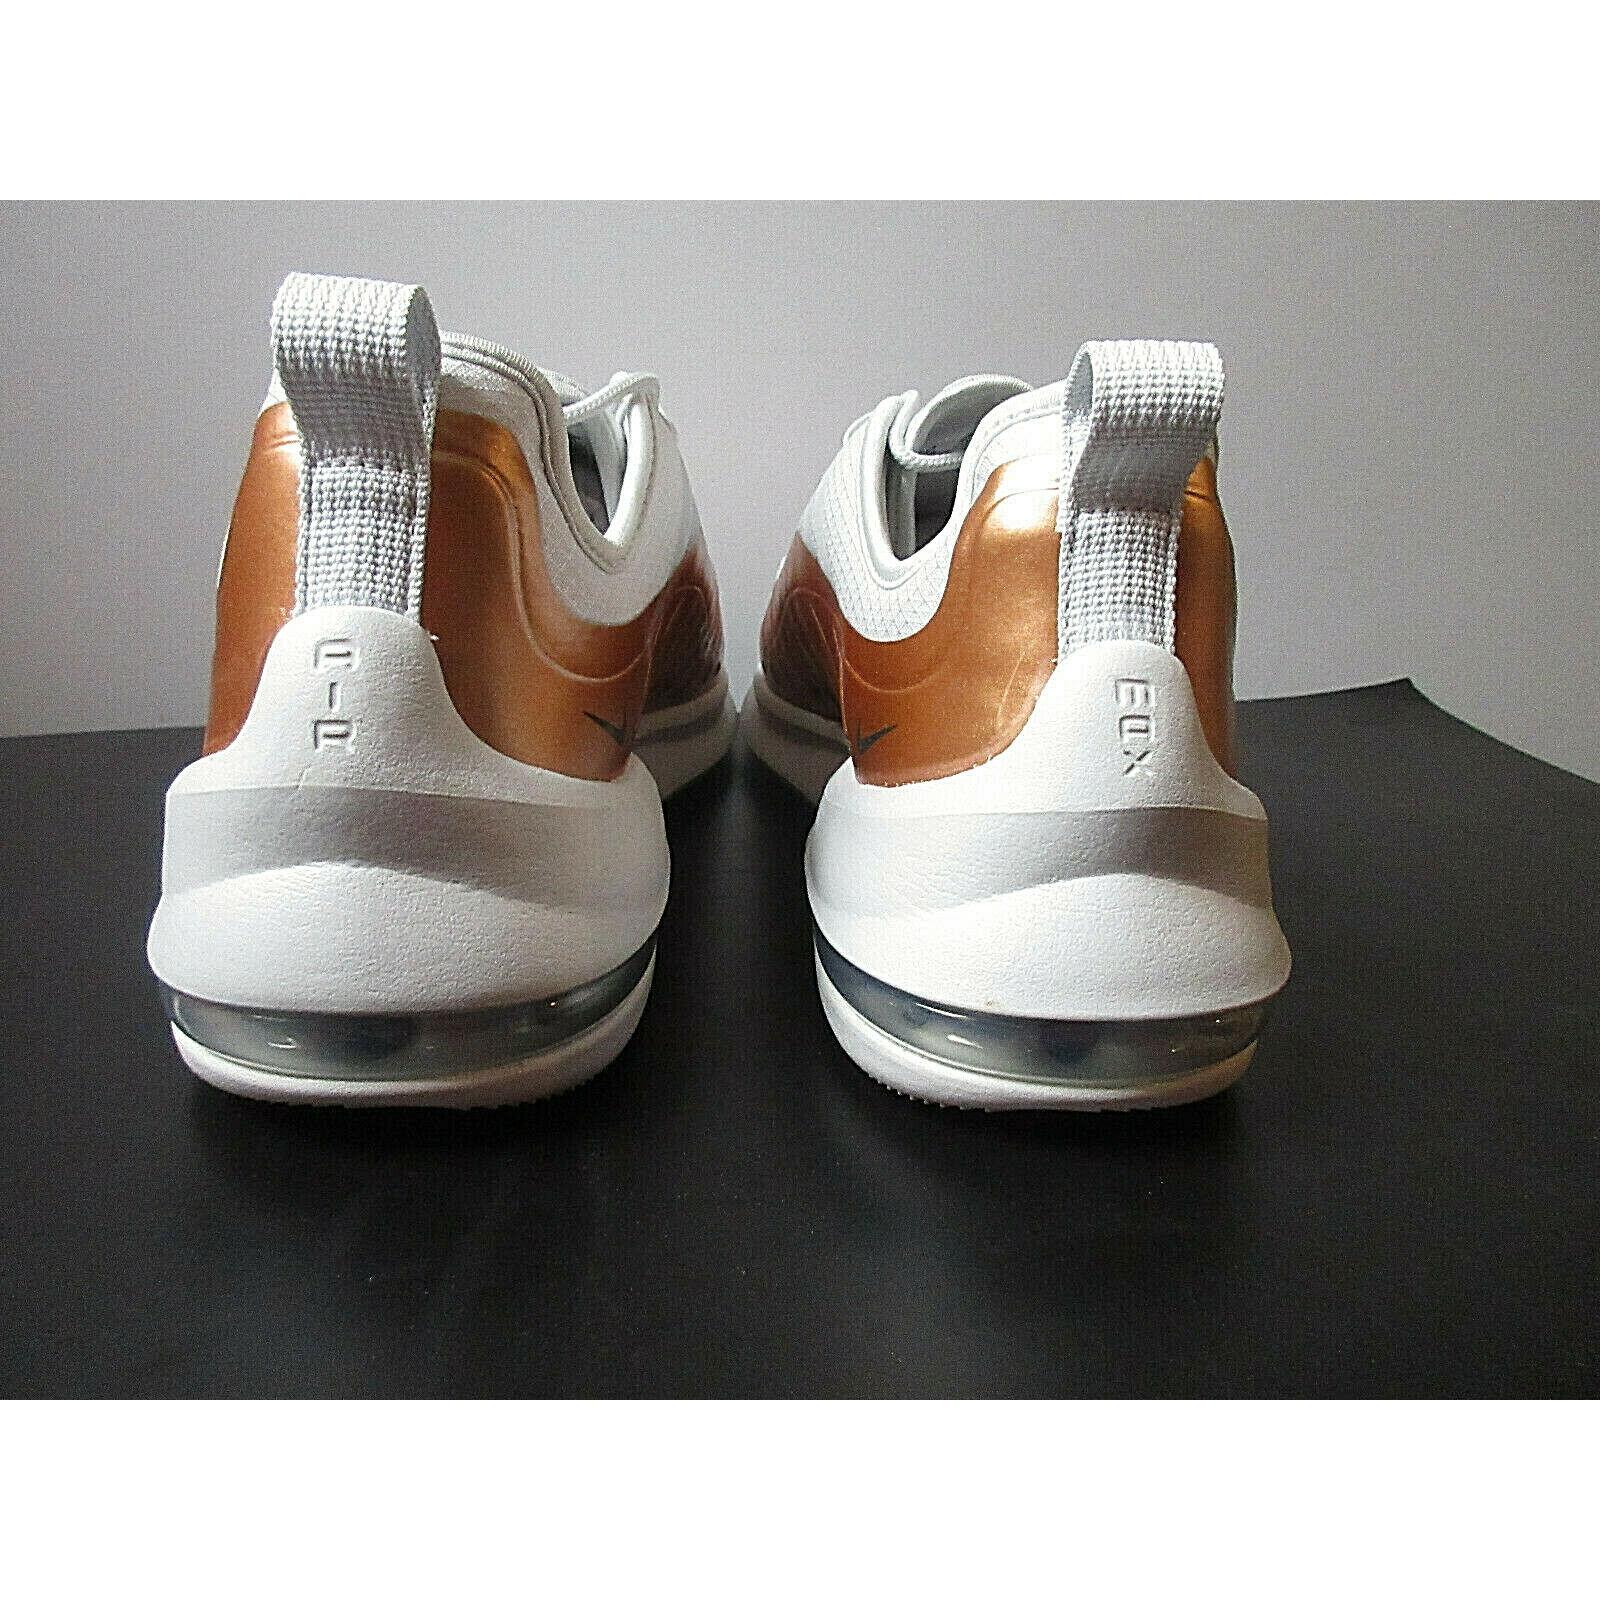 10 Nike Air Max Axis Prem1 Men`s Running Shoes CD4154-002 Size 10 بندول برتقالي